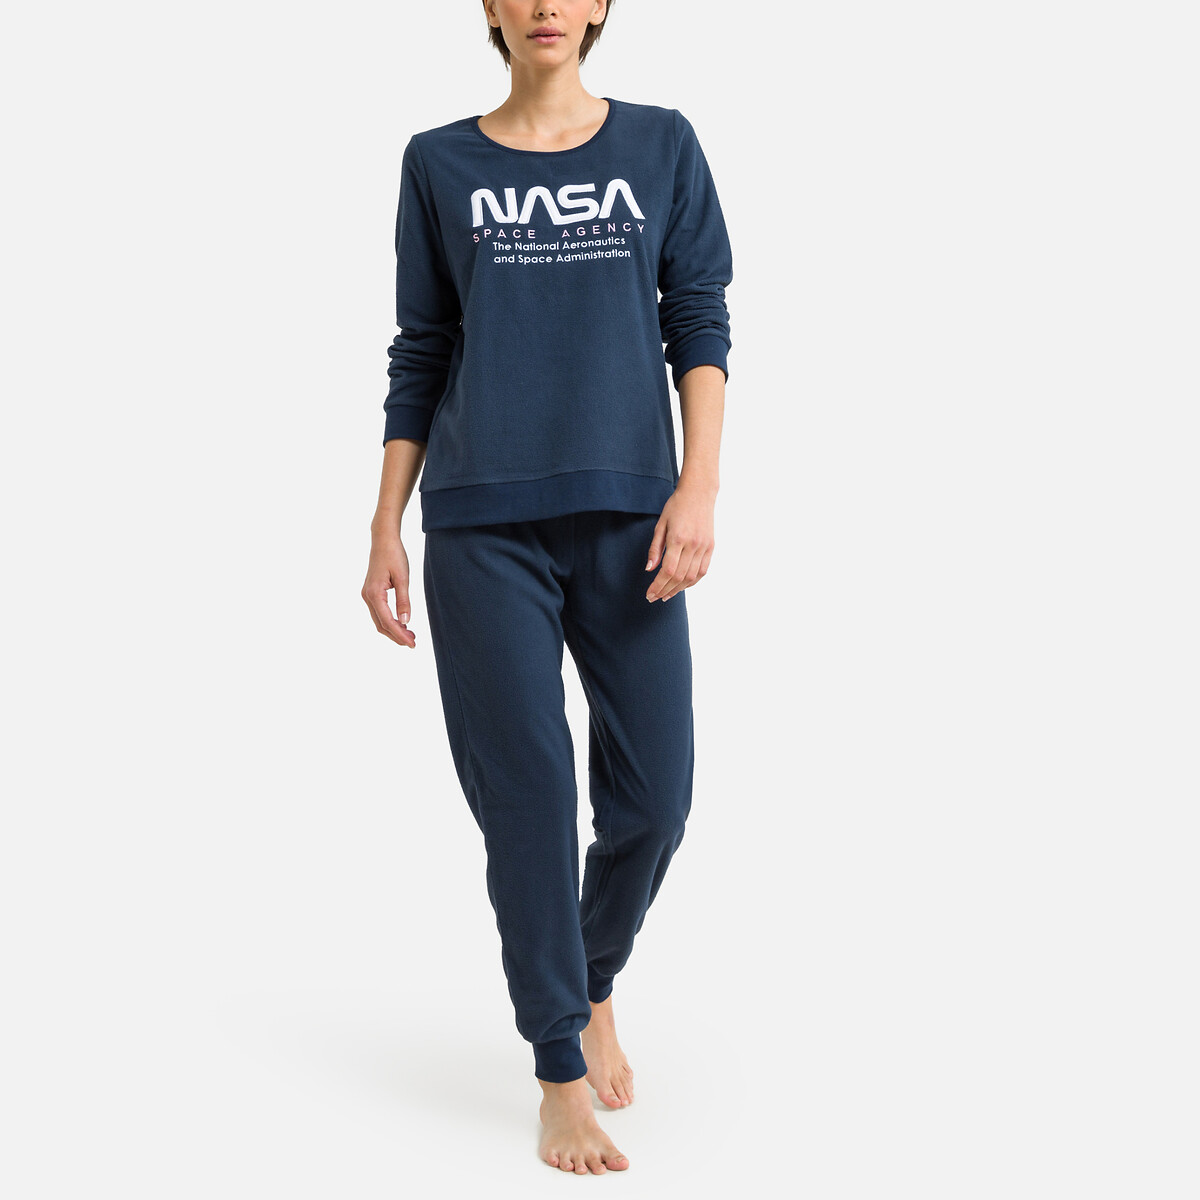 Langer Pyjama Nasa, Micro-Fleece von NASA